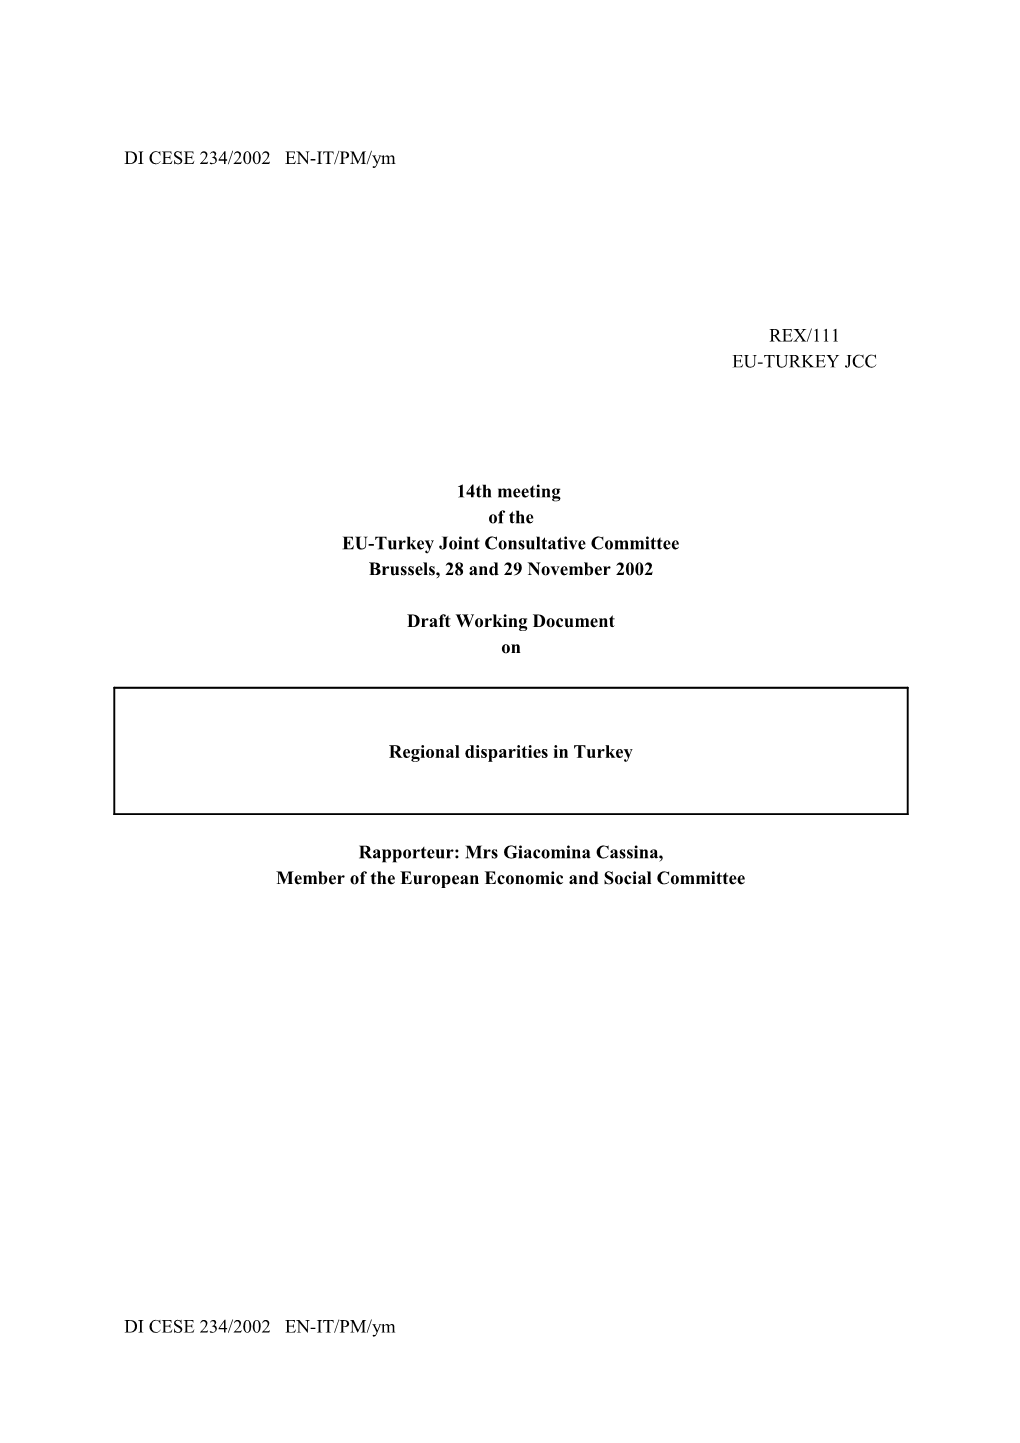 Official Internal Document Di Ces234-2002 Di En